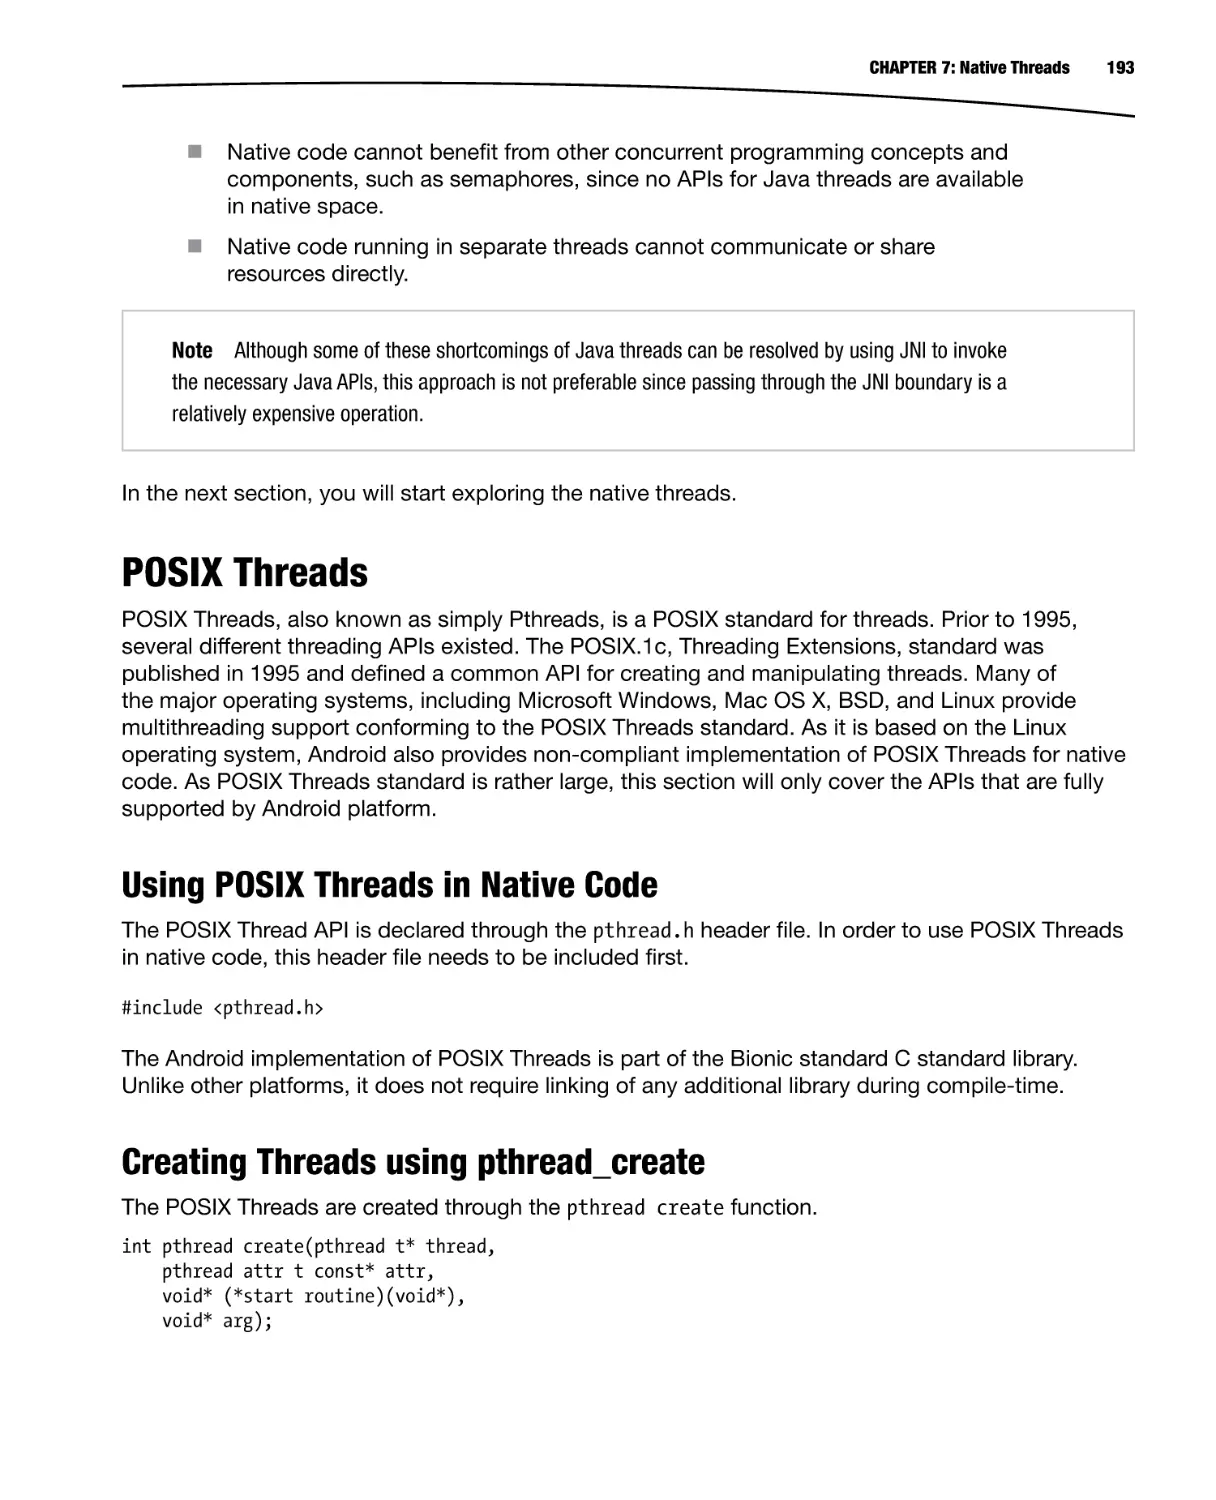 POSIX Threads
Using POSIX Threads in Native Code
Creating Threads using pthread_create